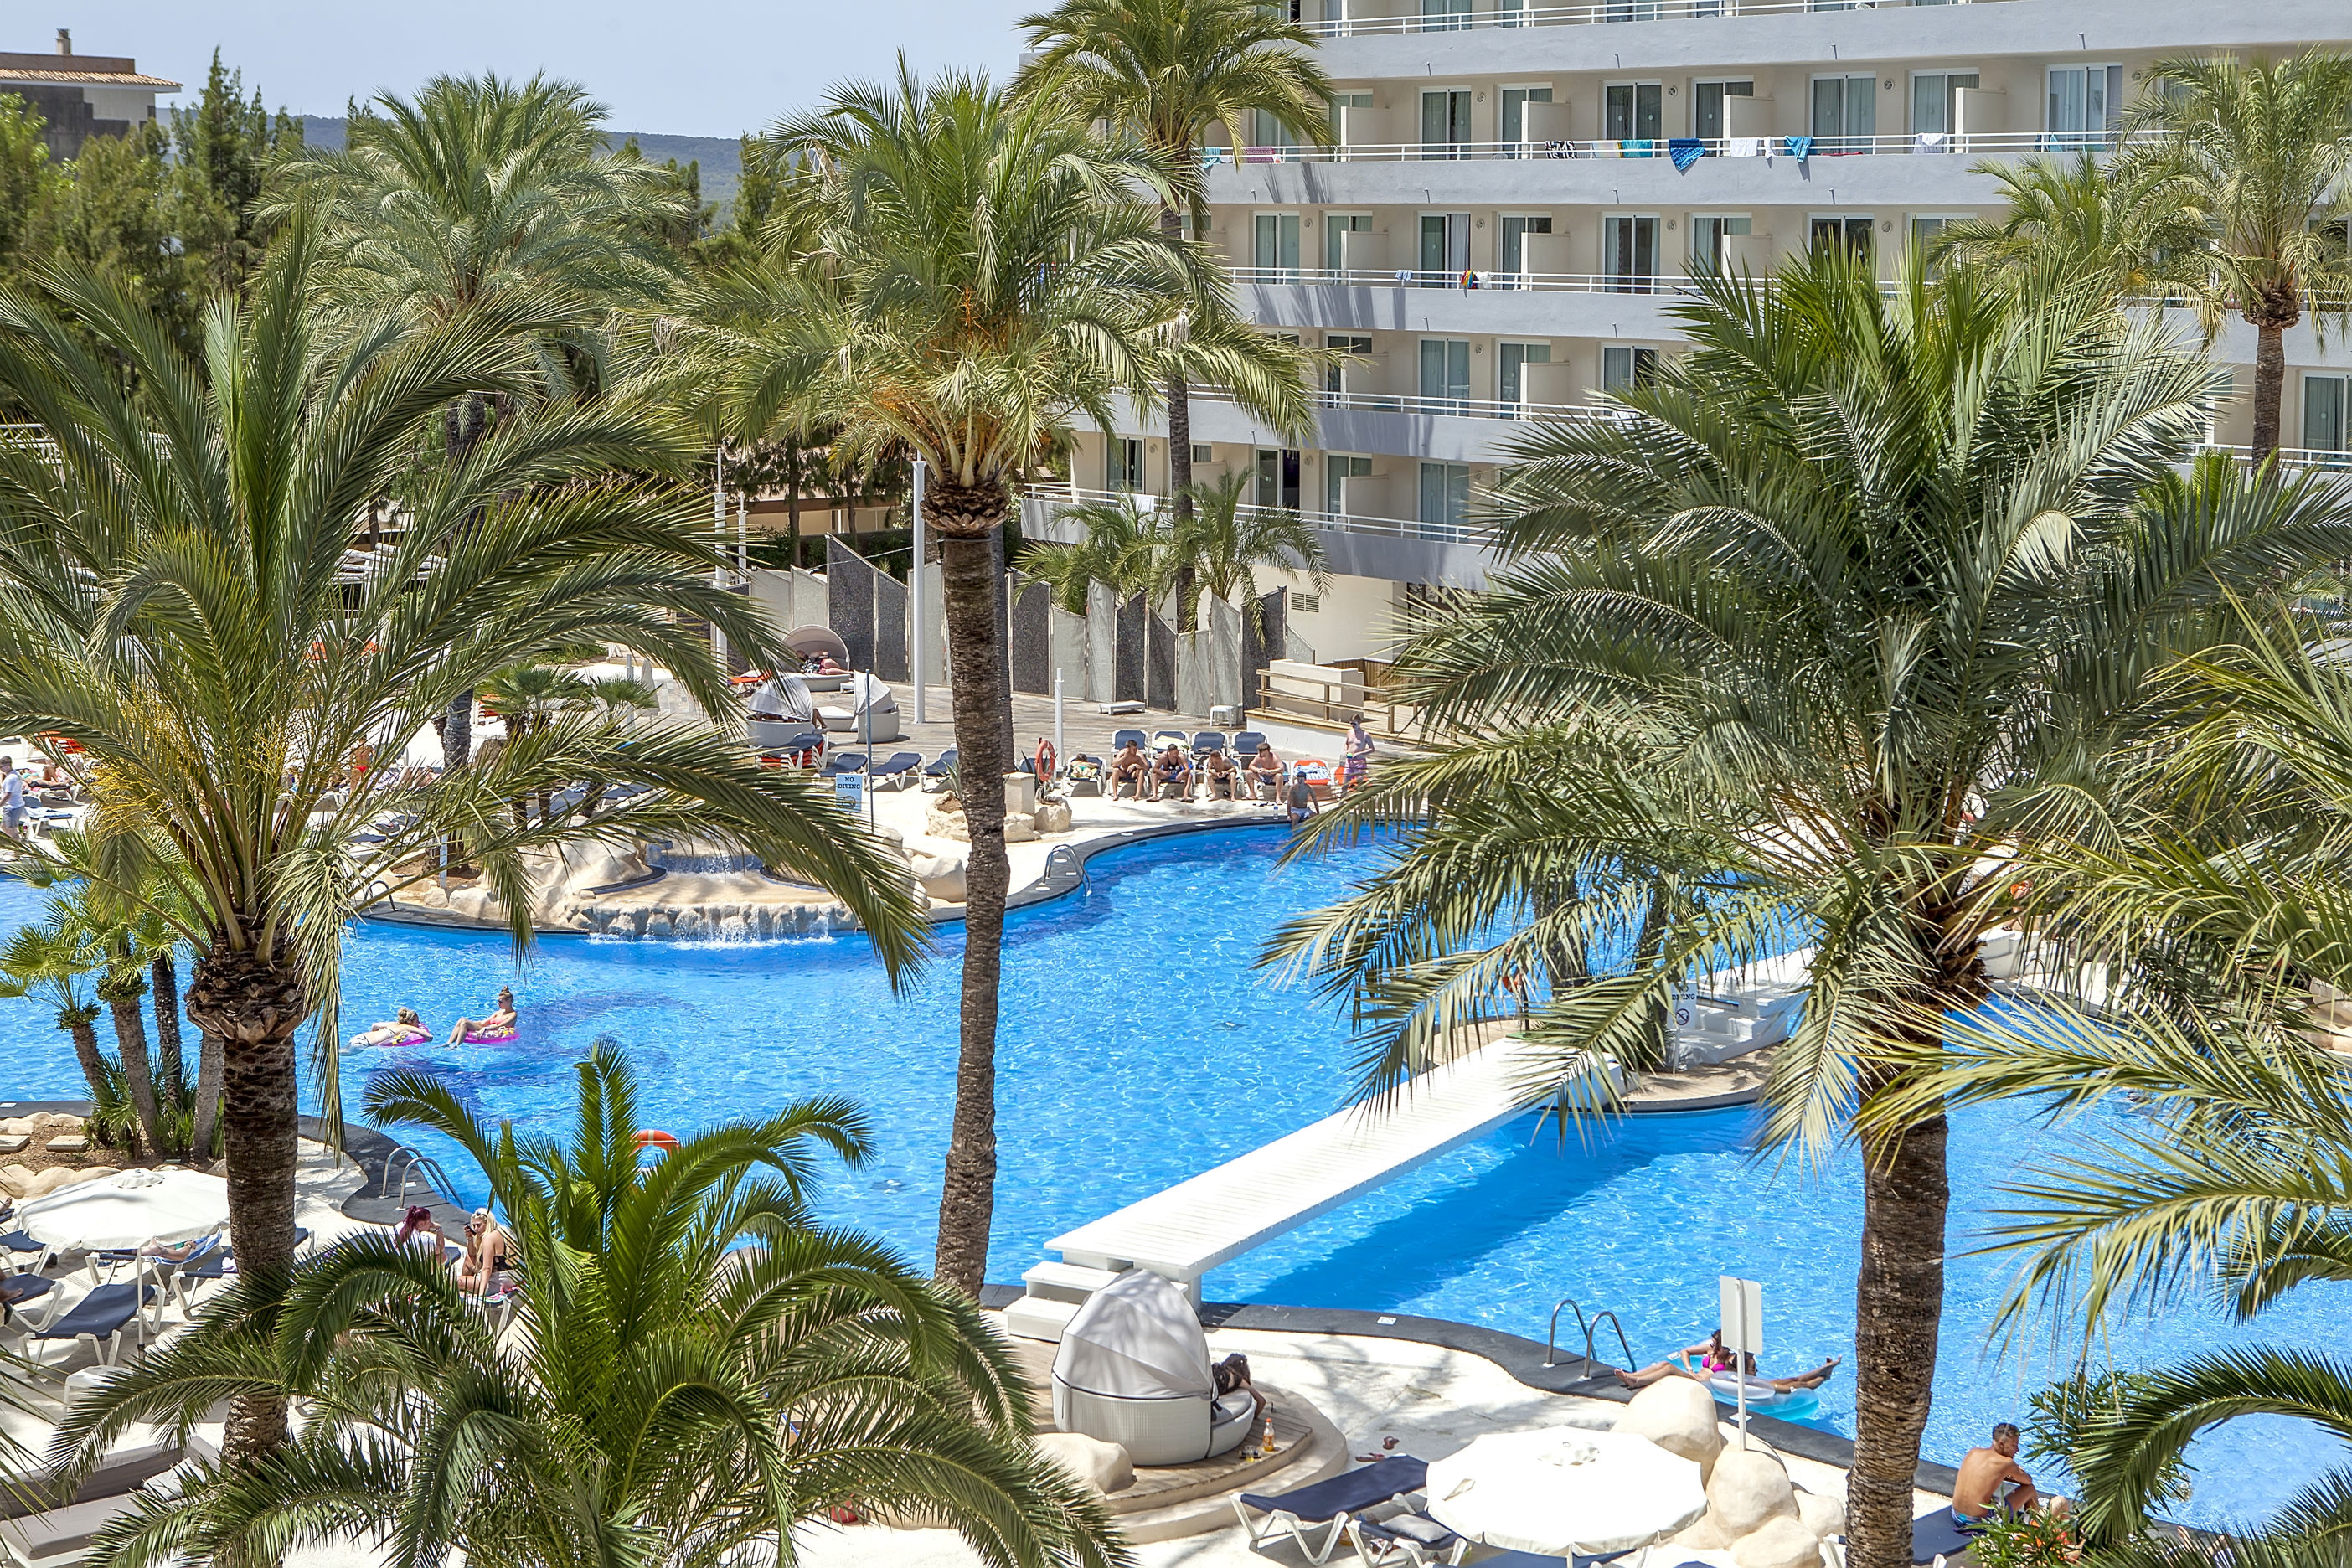 BH Mallorca Hotel